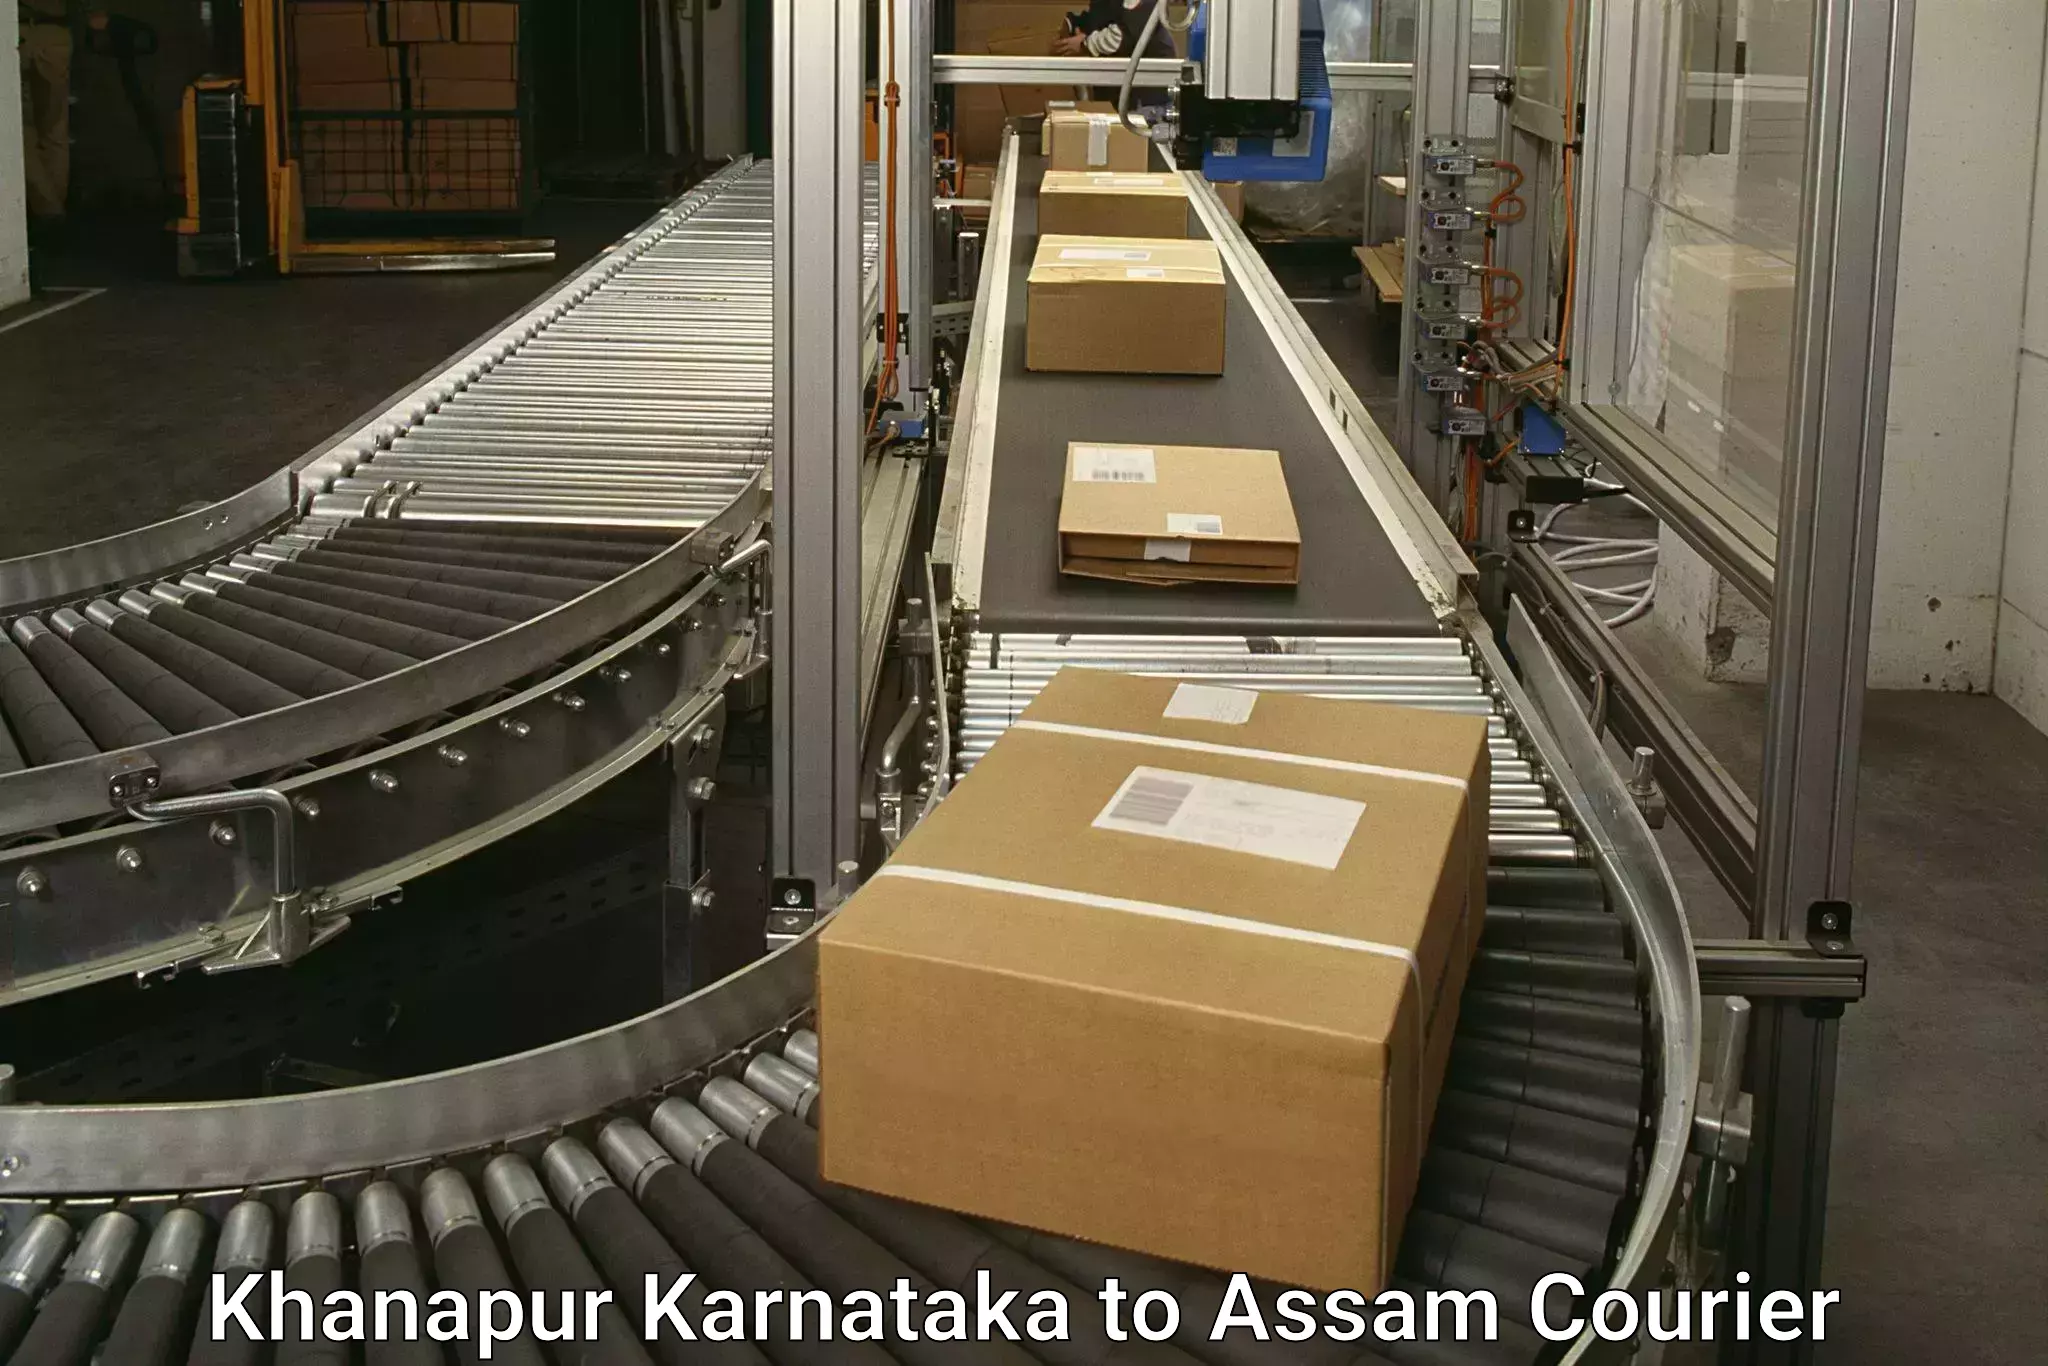 Expedited shipping methods Khanapur Karnataka to Mazbat